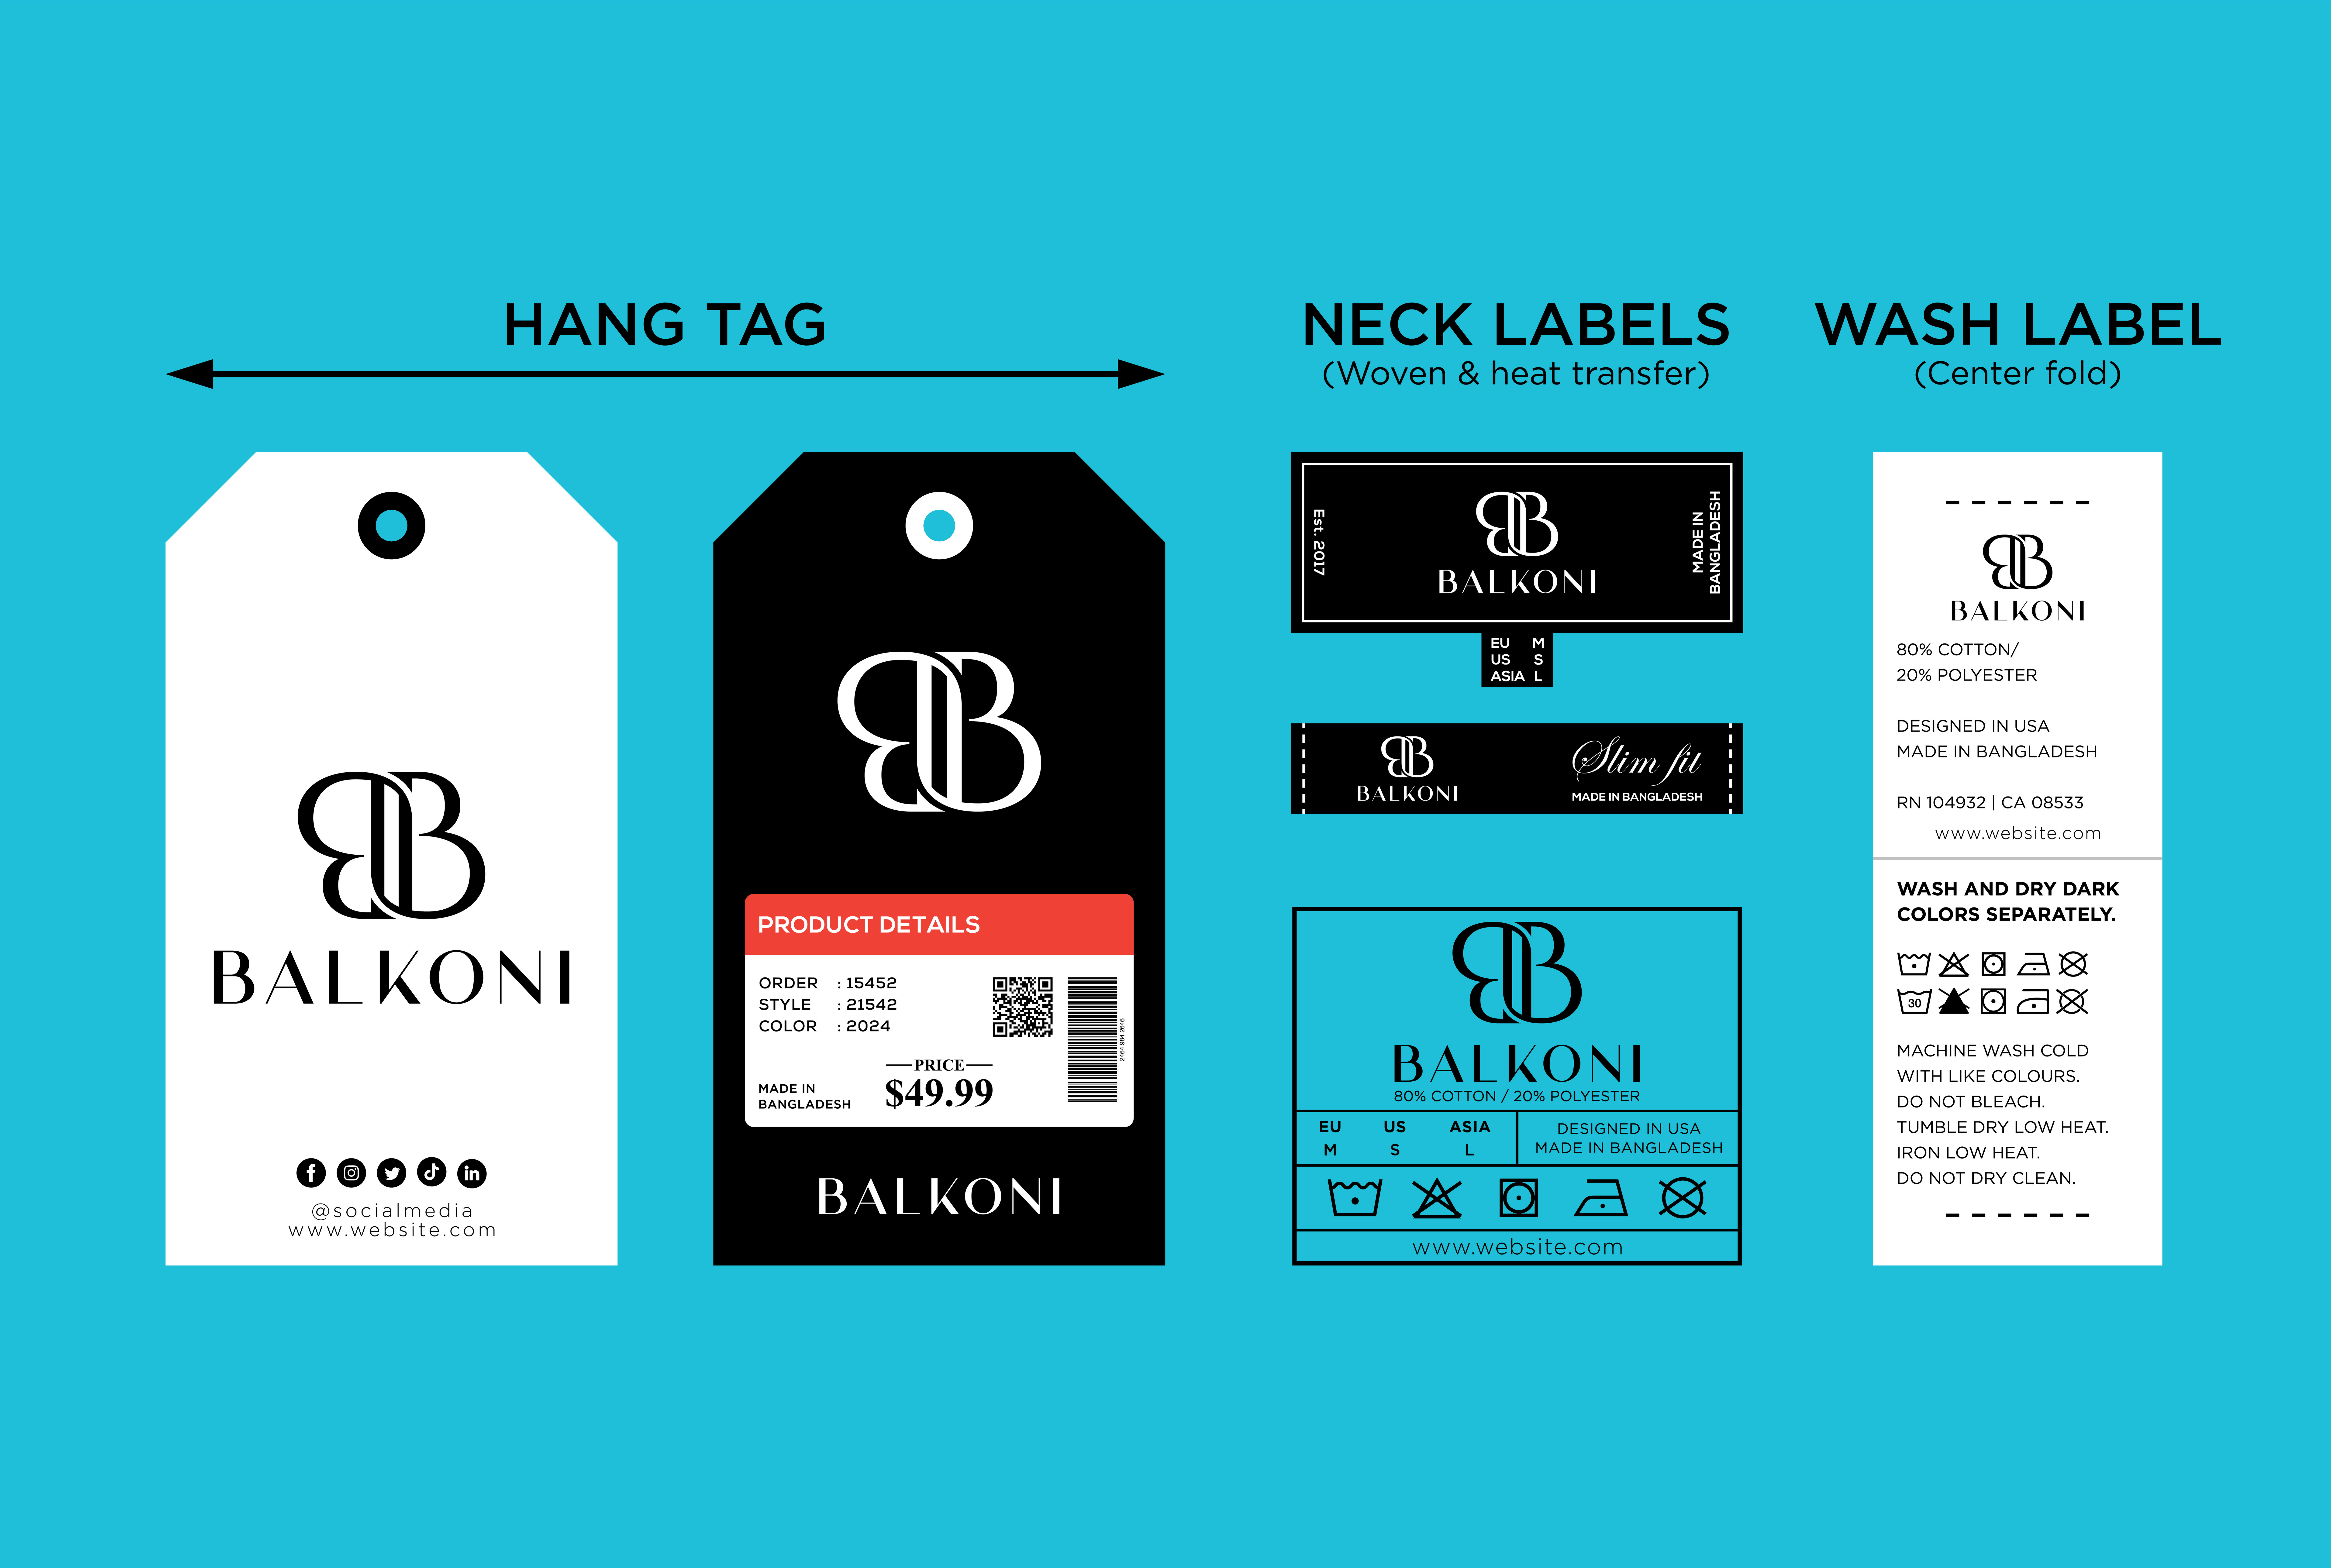 Designersazedul: I will design clothing label, clothing tag